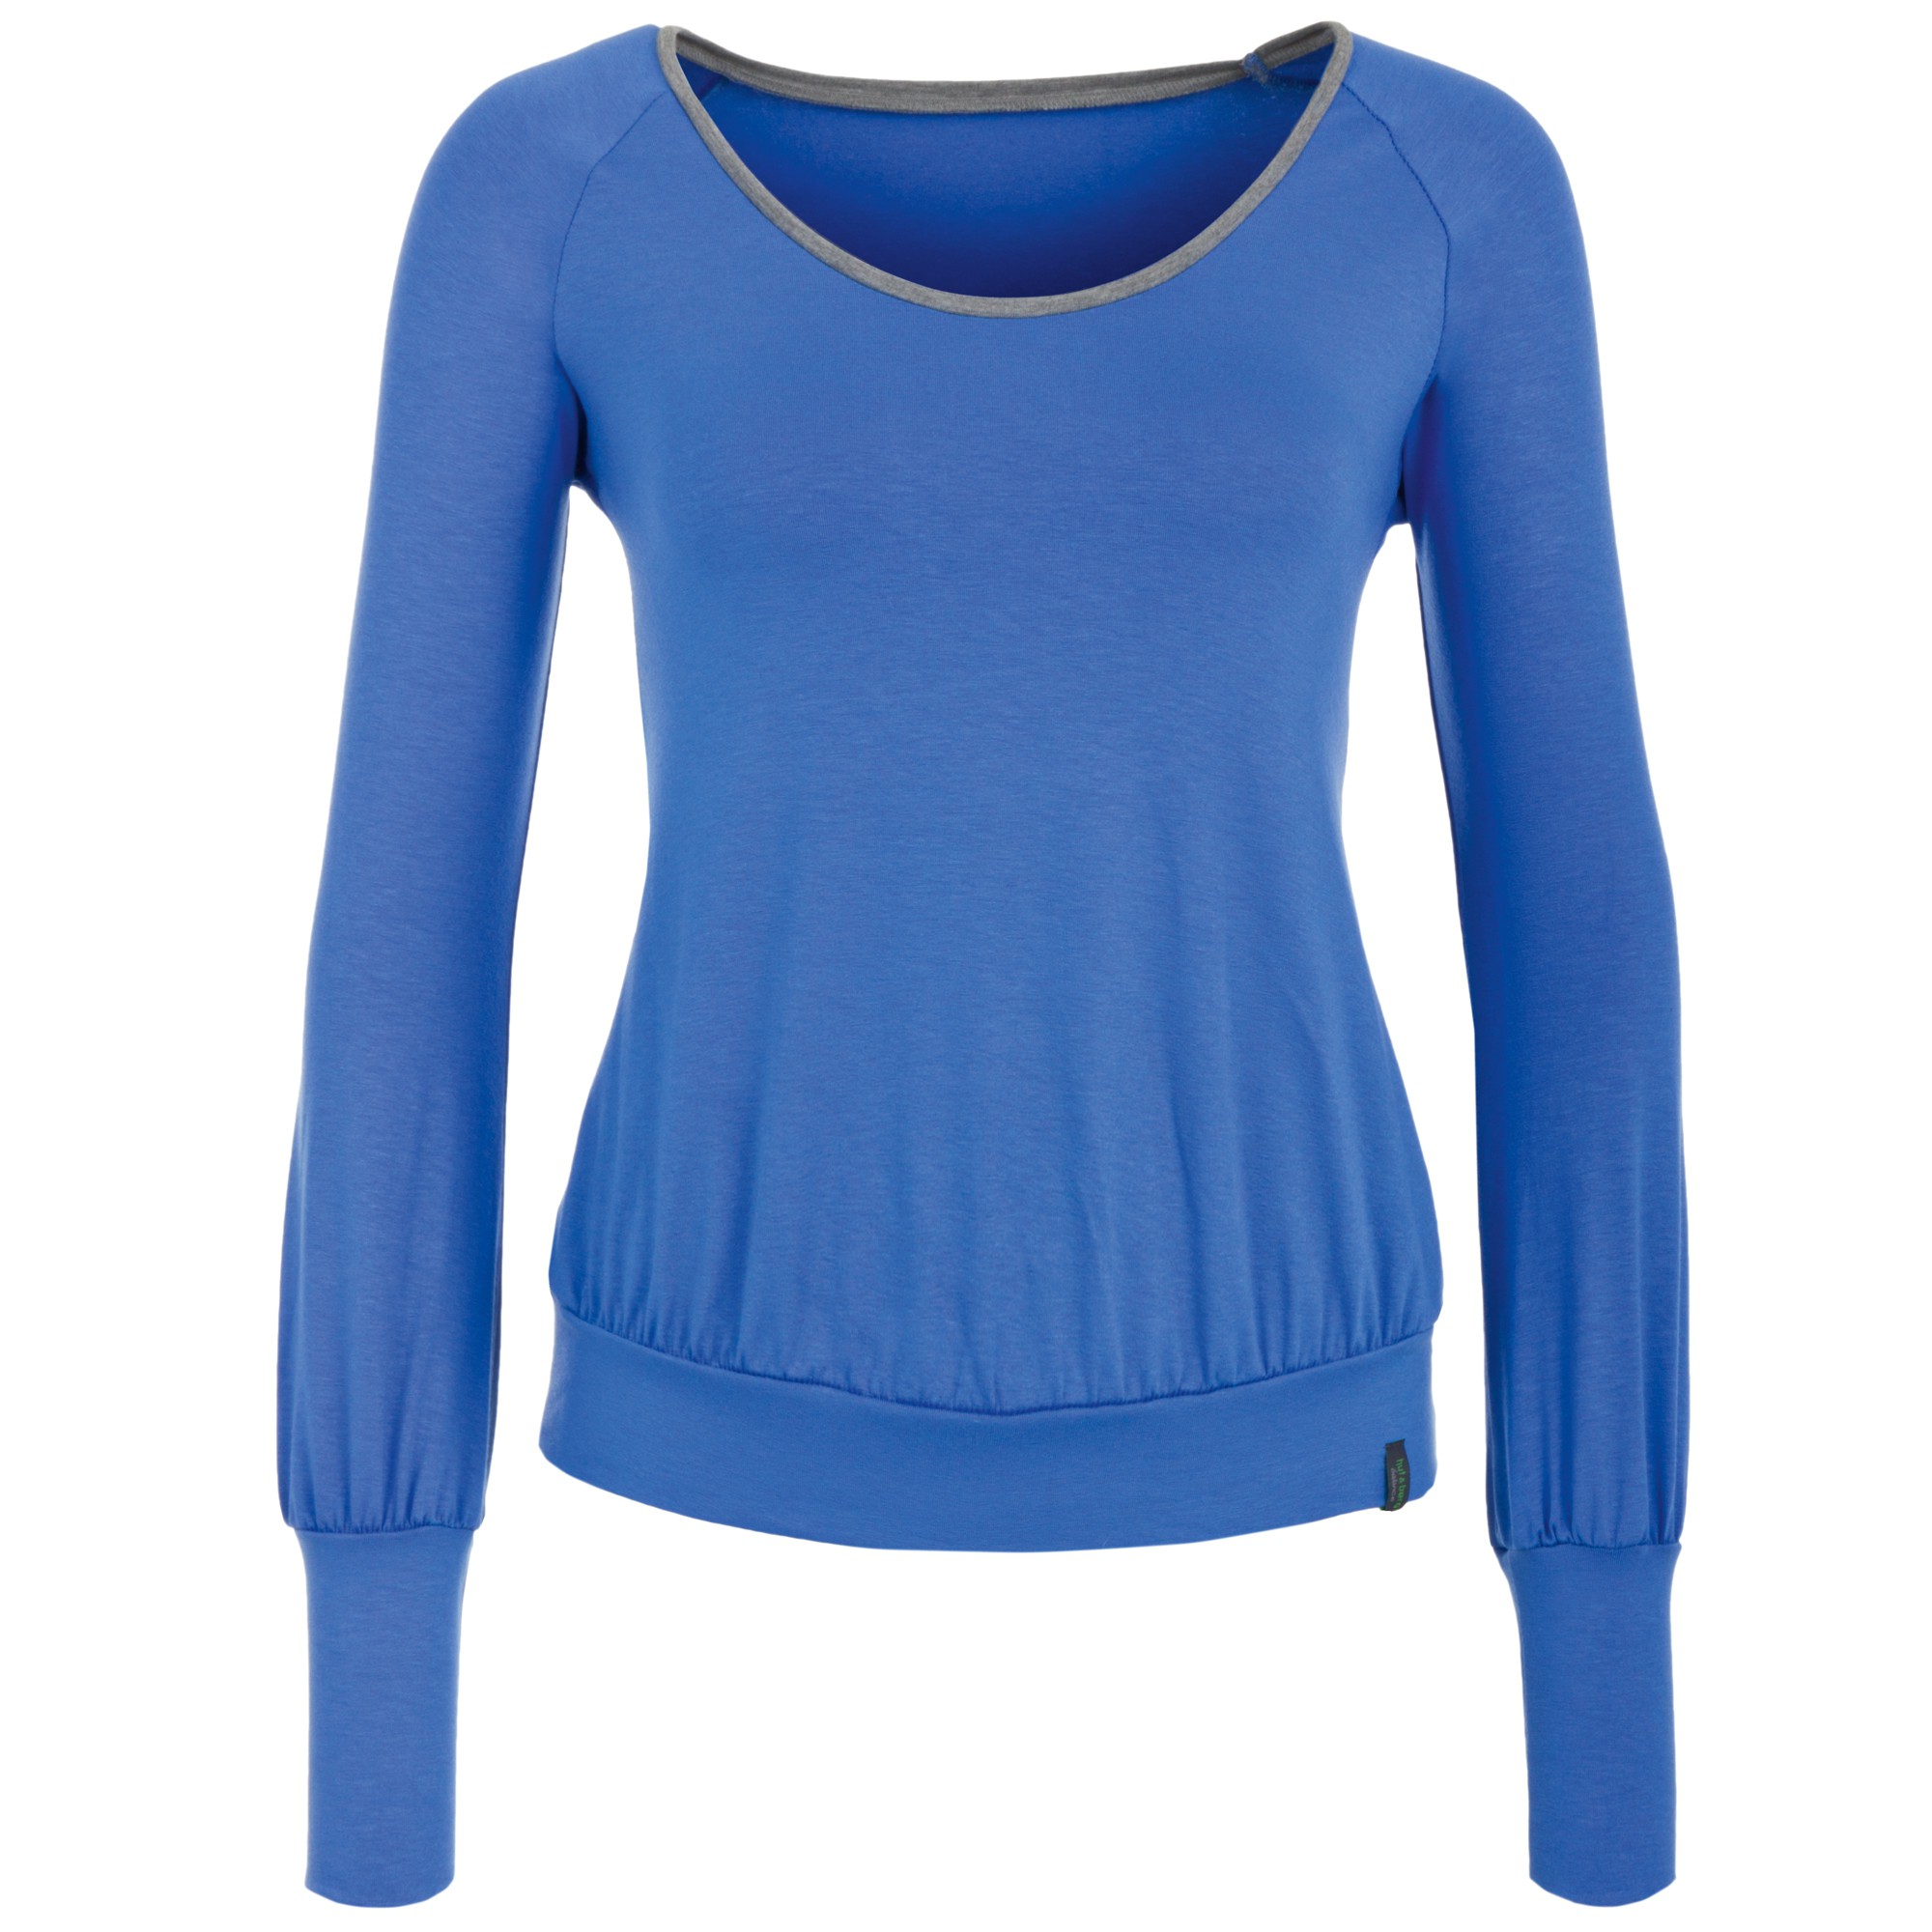 Yoga Langarm Shirt/Oberteil blau/grau, SITA LONGSLEEVE von hut und